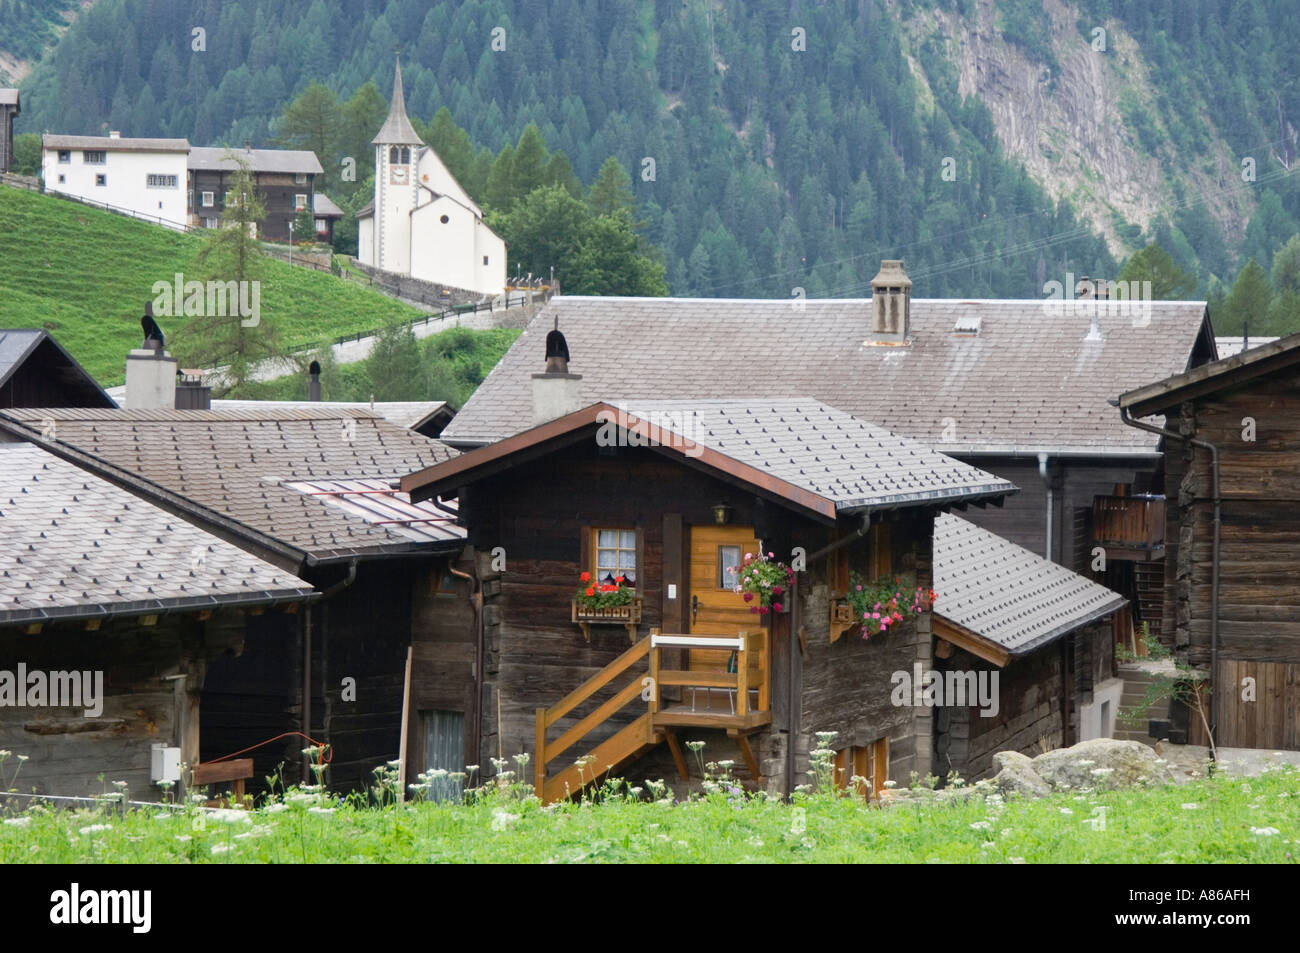 Village of Binn Binn Wallis Switzerland August 2006 Stock Photo